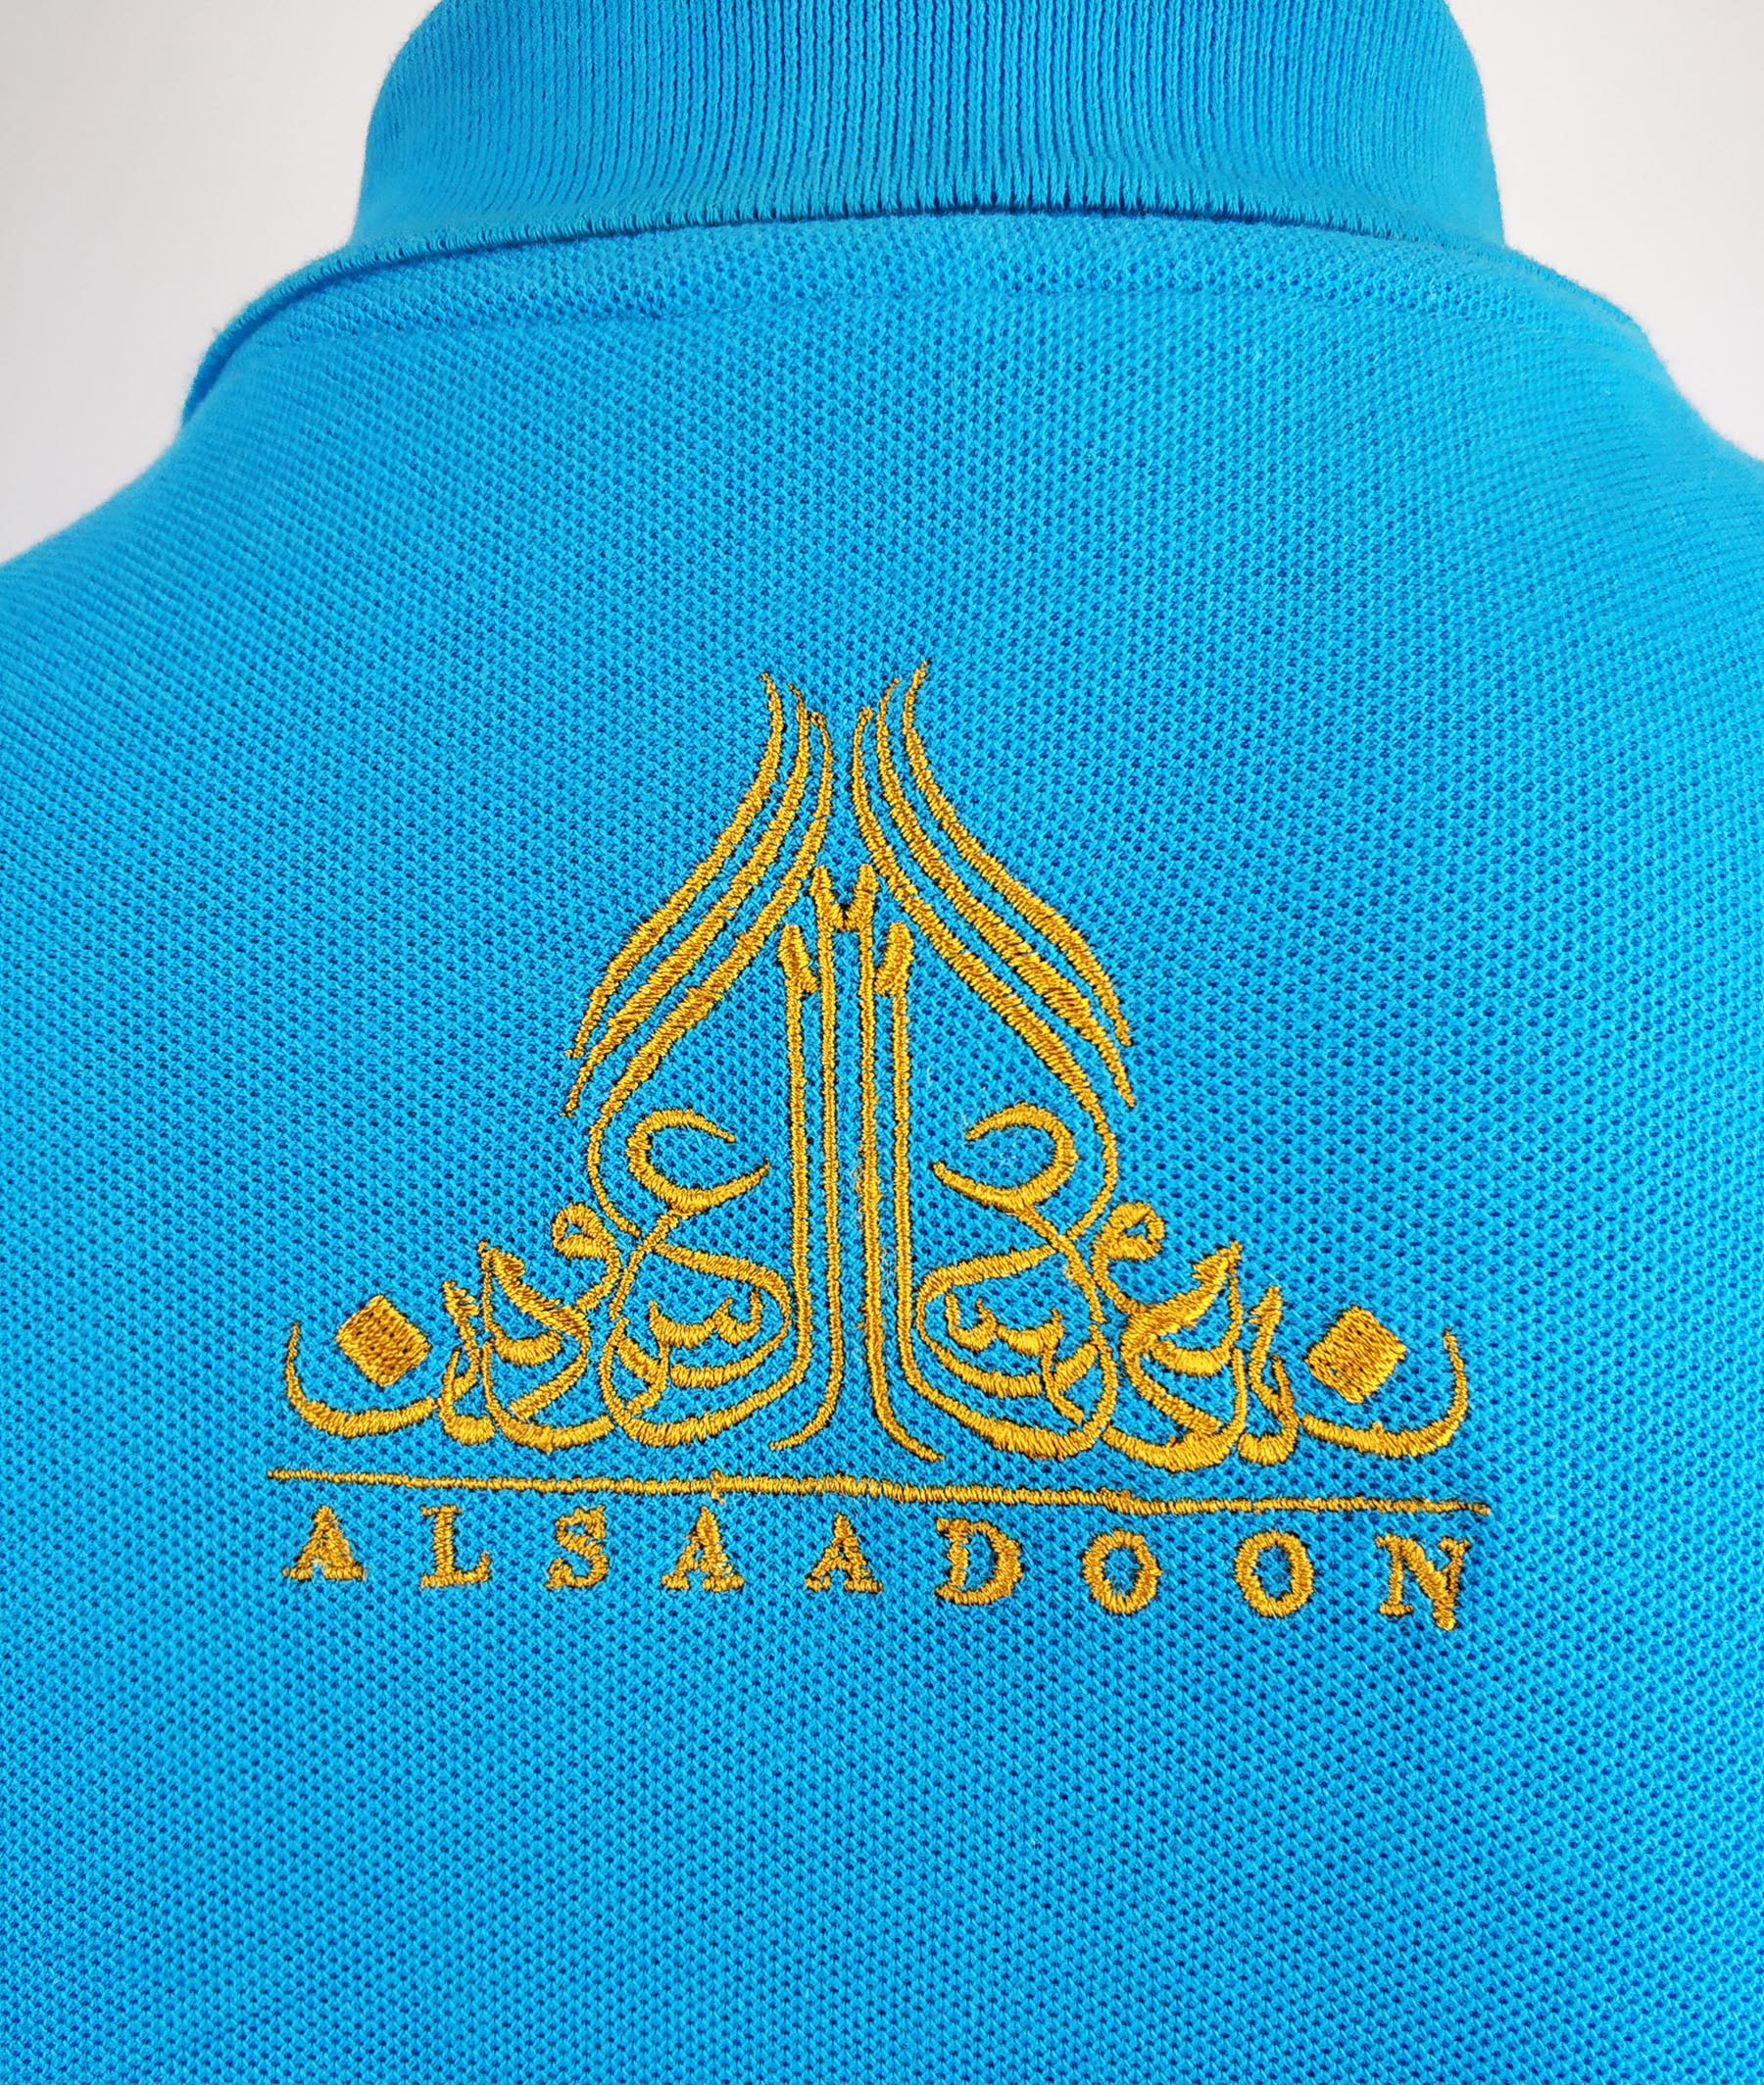 100% Cotton material polo shirts with company logo embroidery, custom made company staff uniforms 